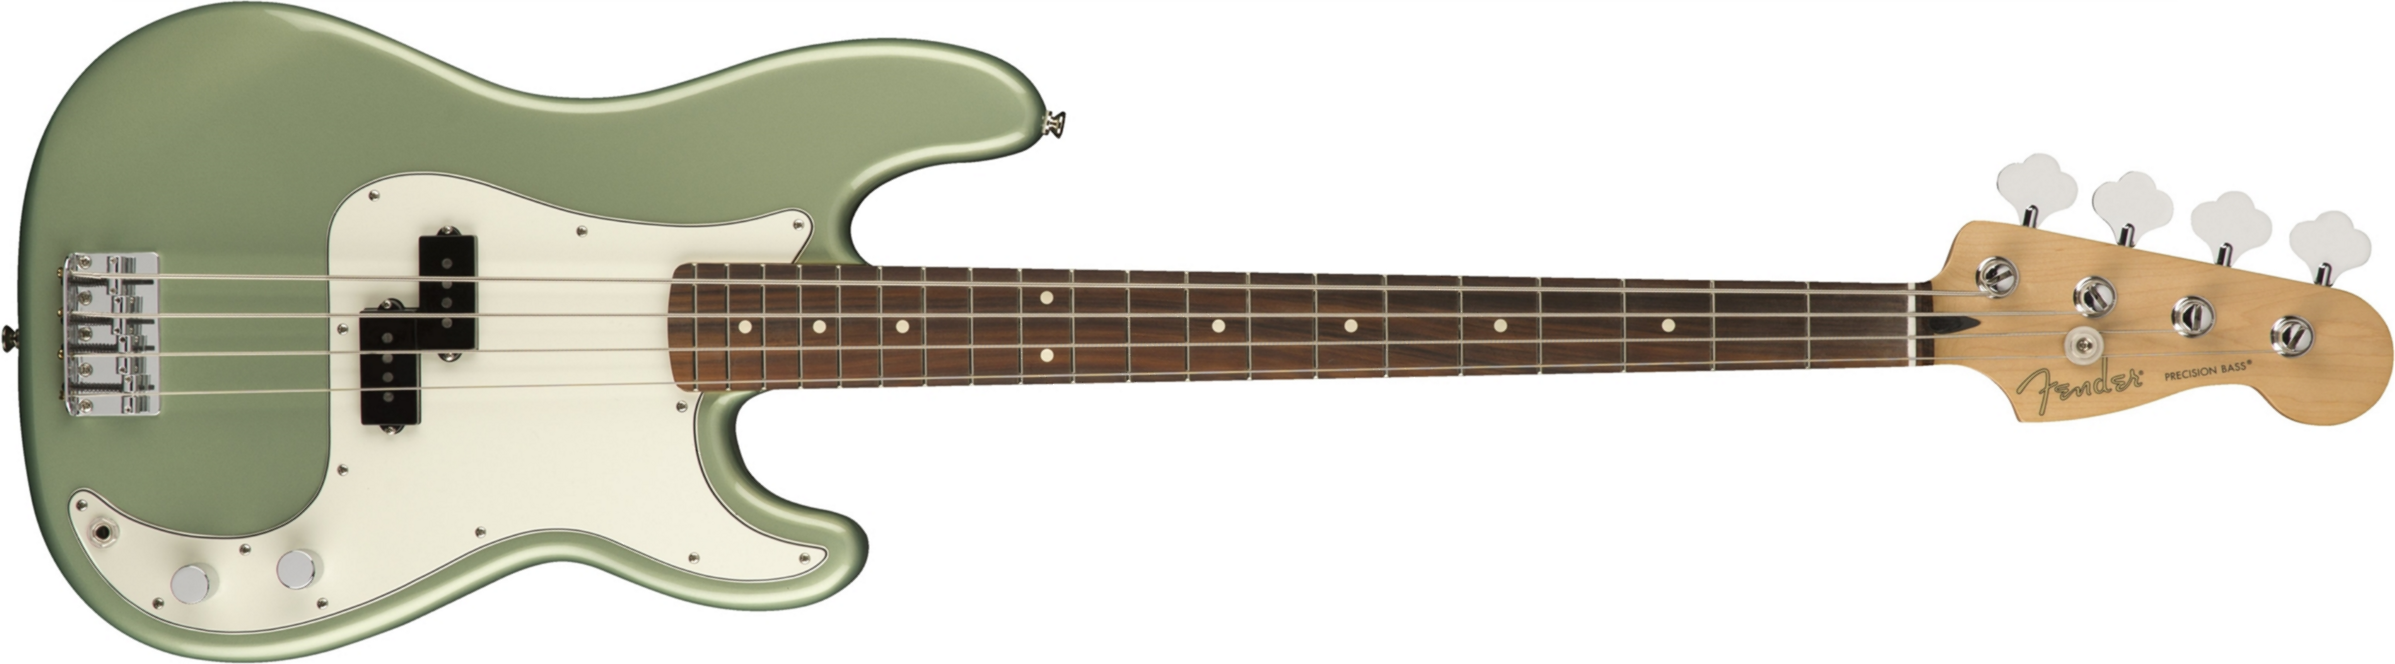 Fender Precision Bass Player Mex Pf - Sage Green Metallic - Solid body elektrische bas - Main picture